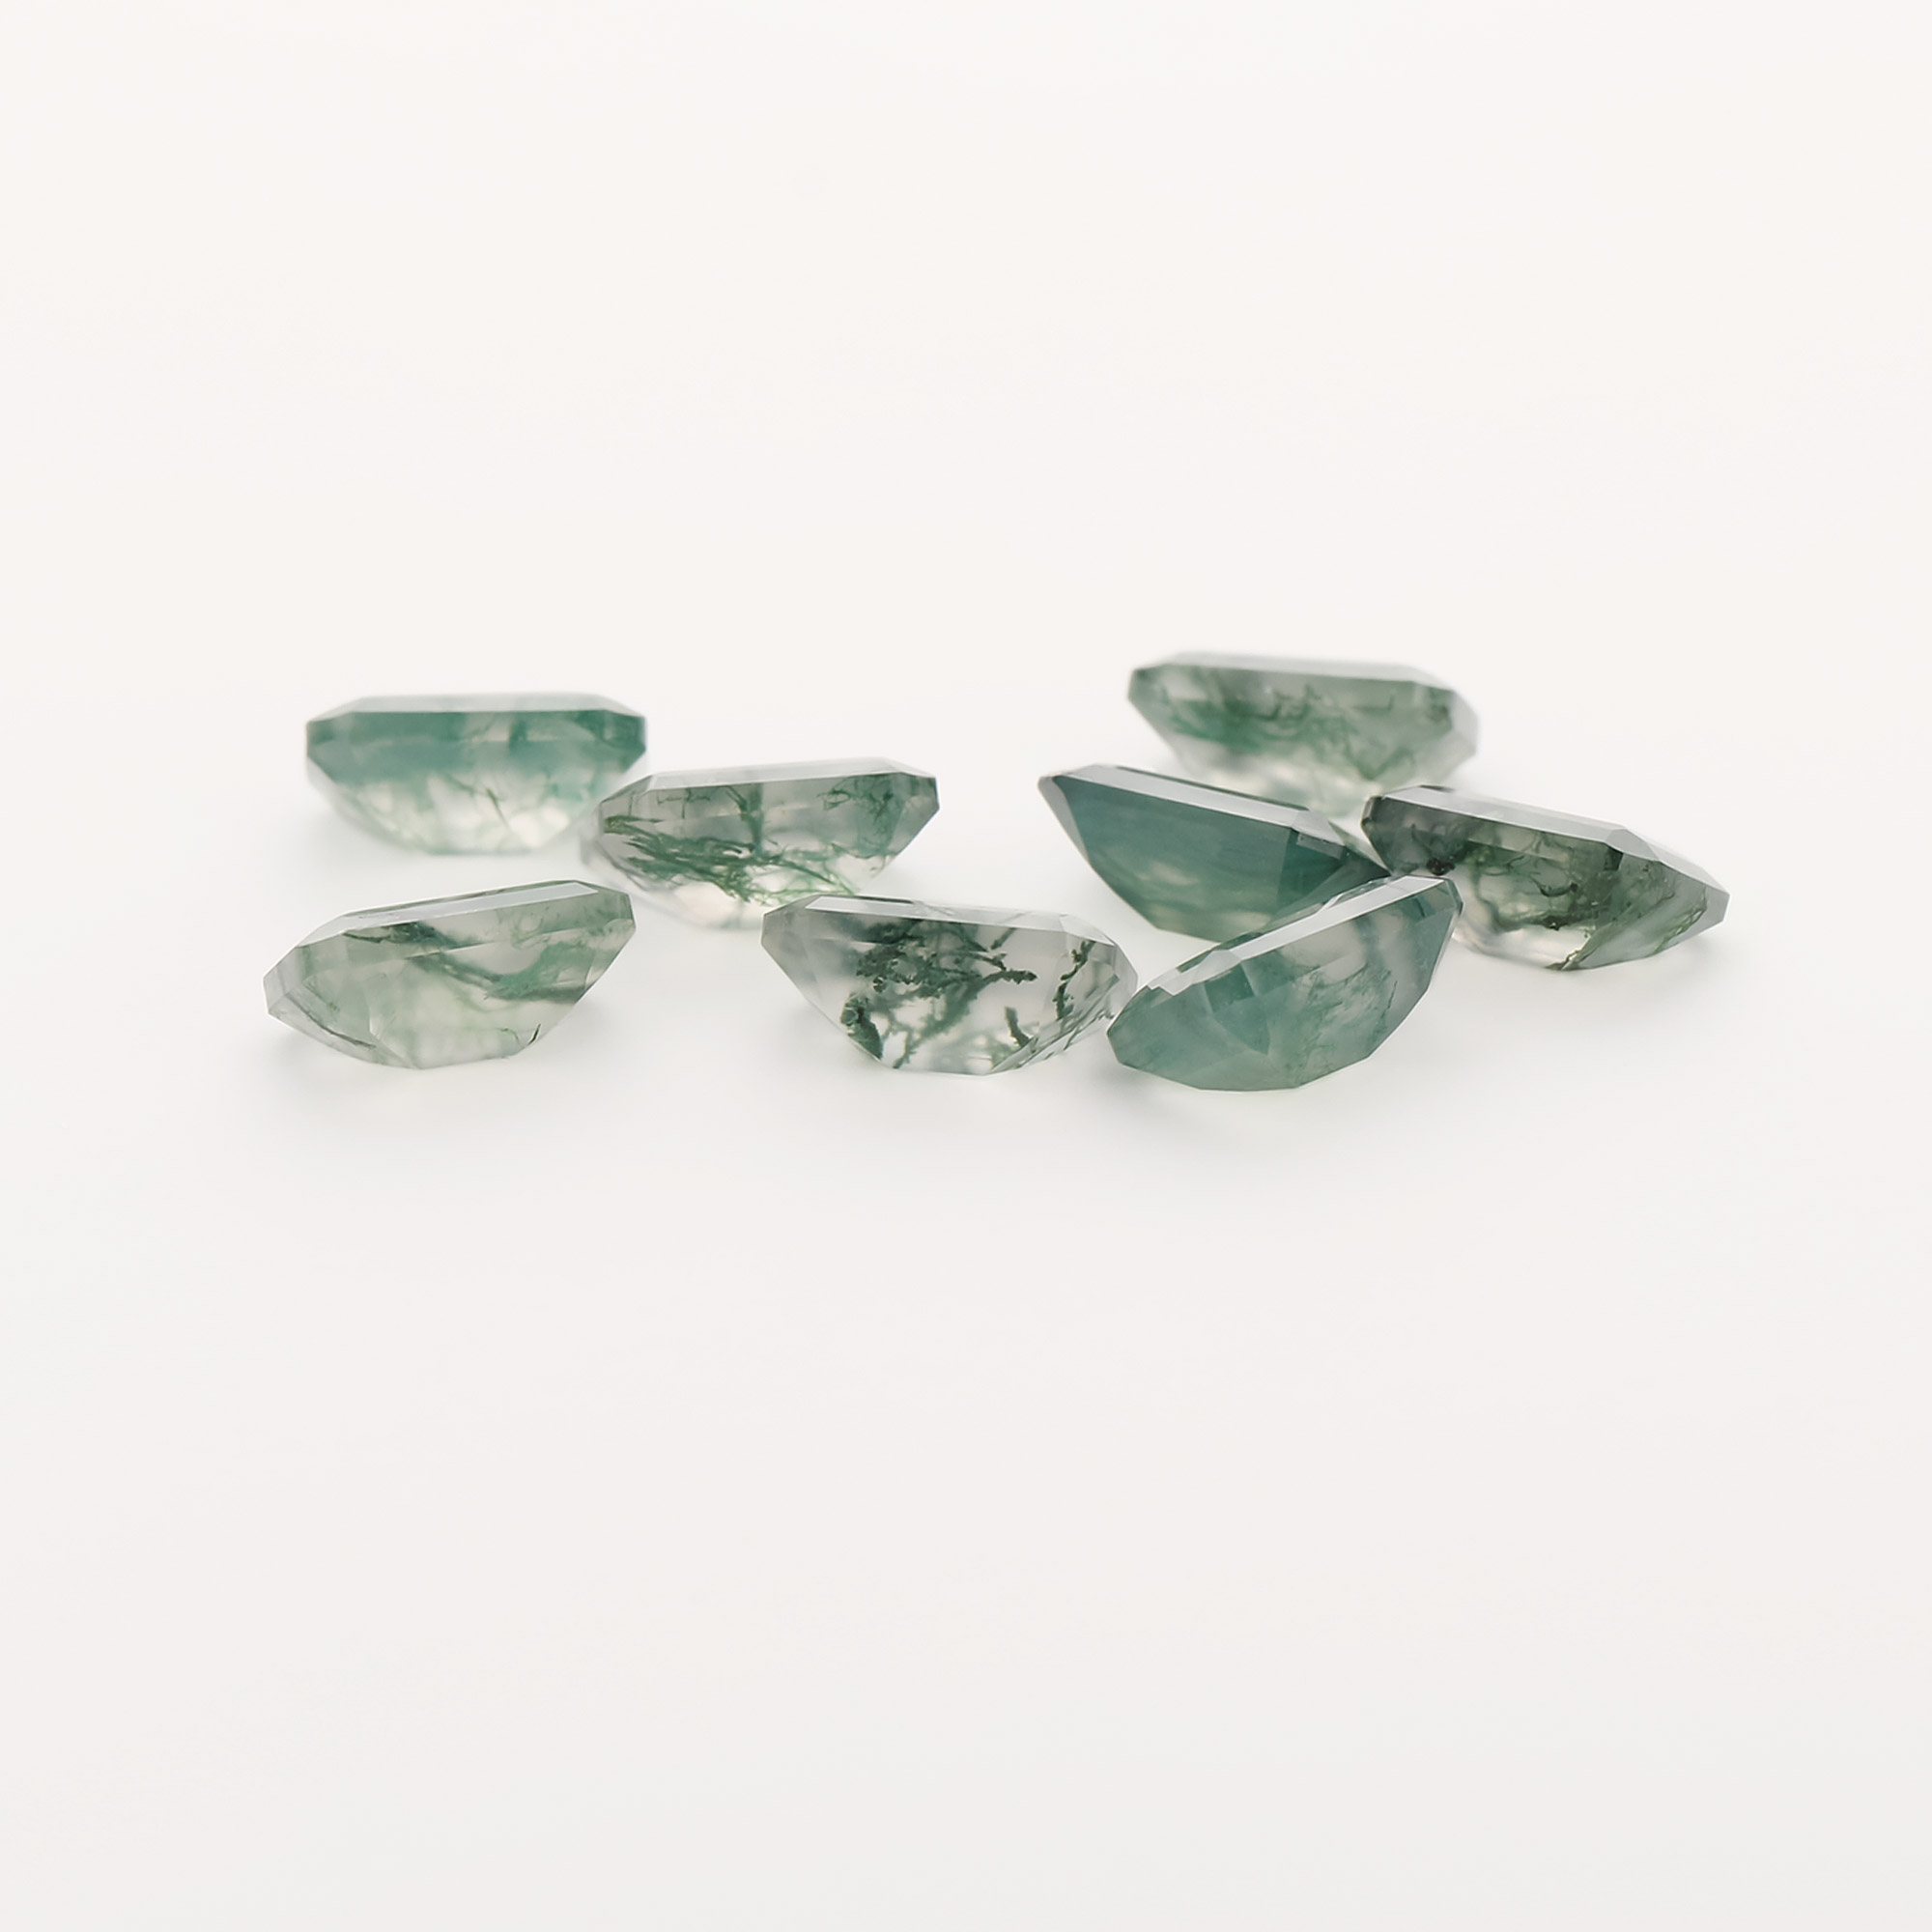 5X7MM Green Moss Agate Emerald Cut Faceted Nature Stone,Semi-precious Gemstone,Rectangle Gemstone,Unique Gemstone,DIY Jewelry Supplies 4170022 - Click Image to Close